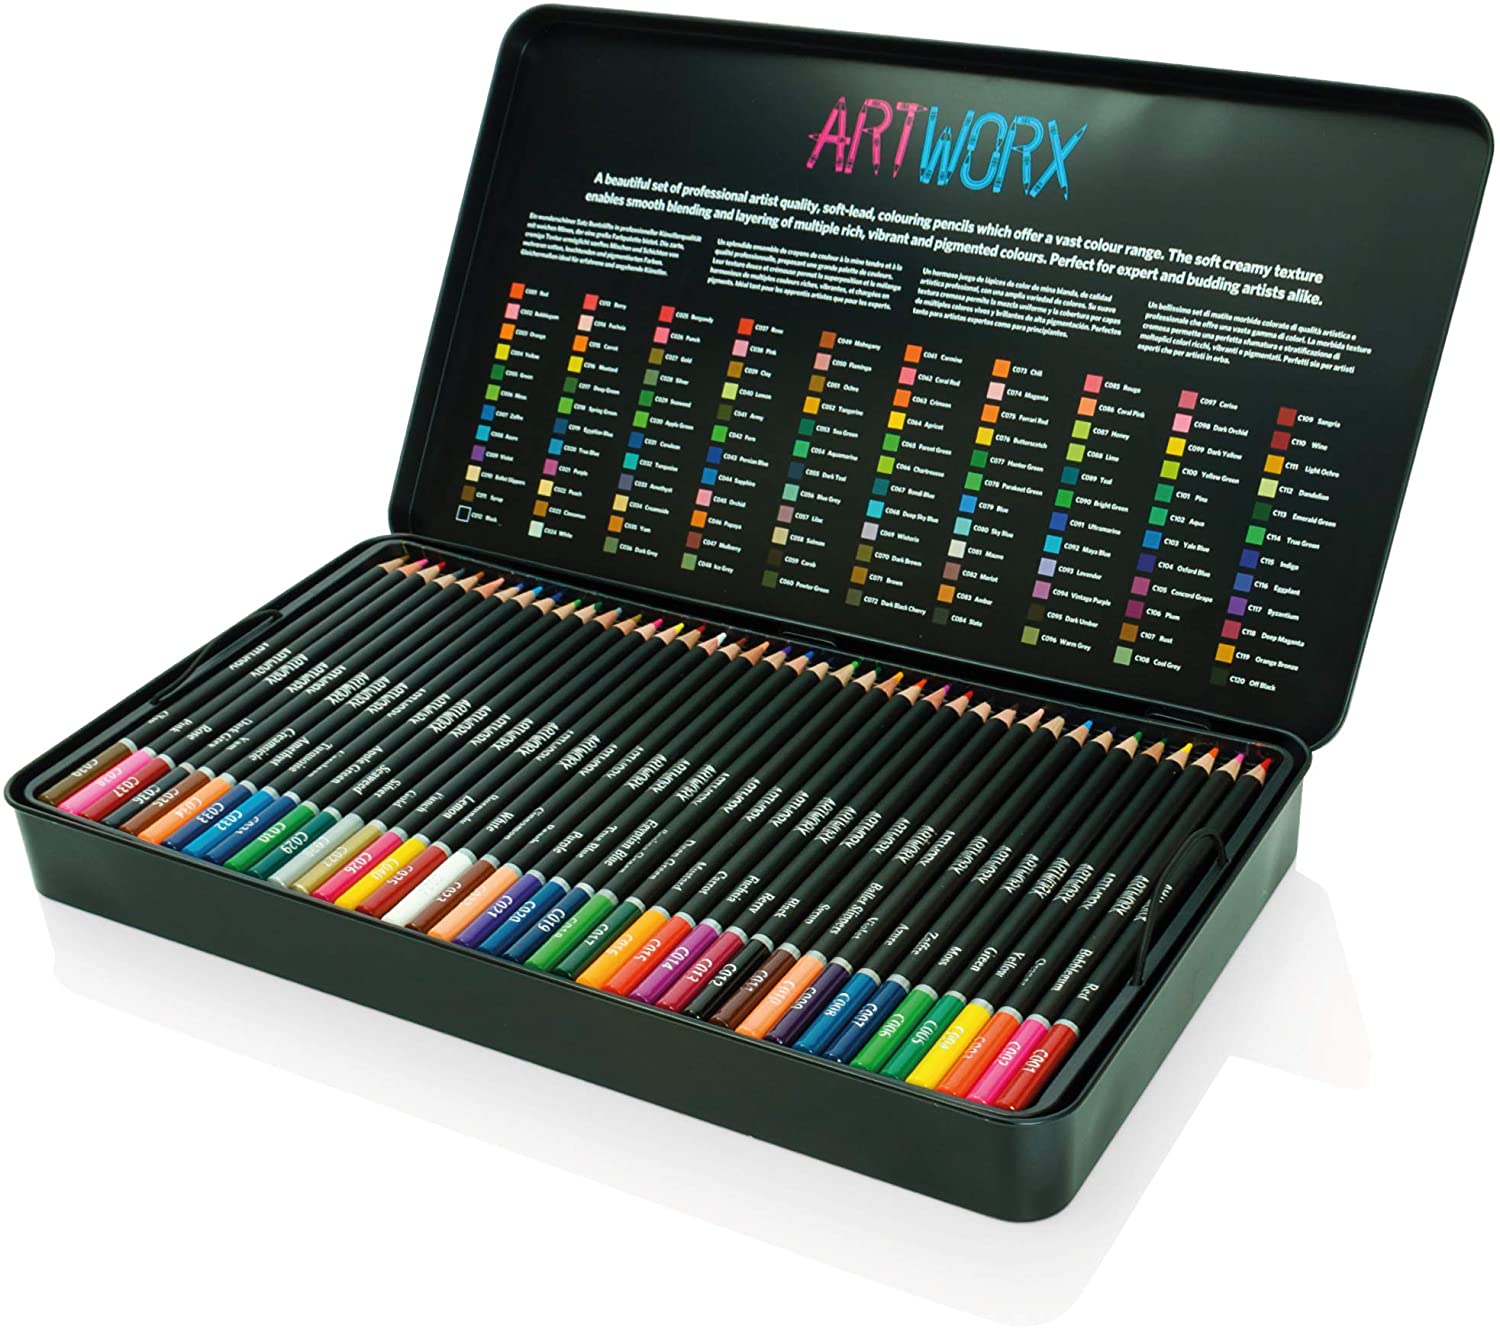 Artworx Premium Artists Colouring Art Pencils open case